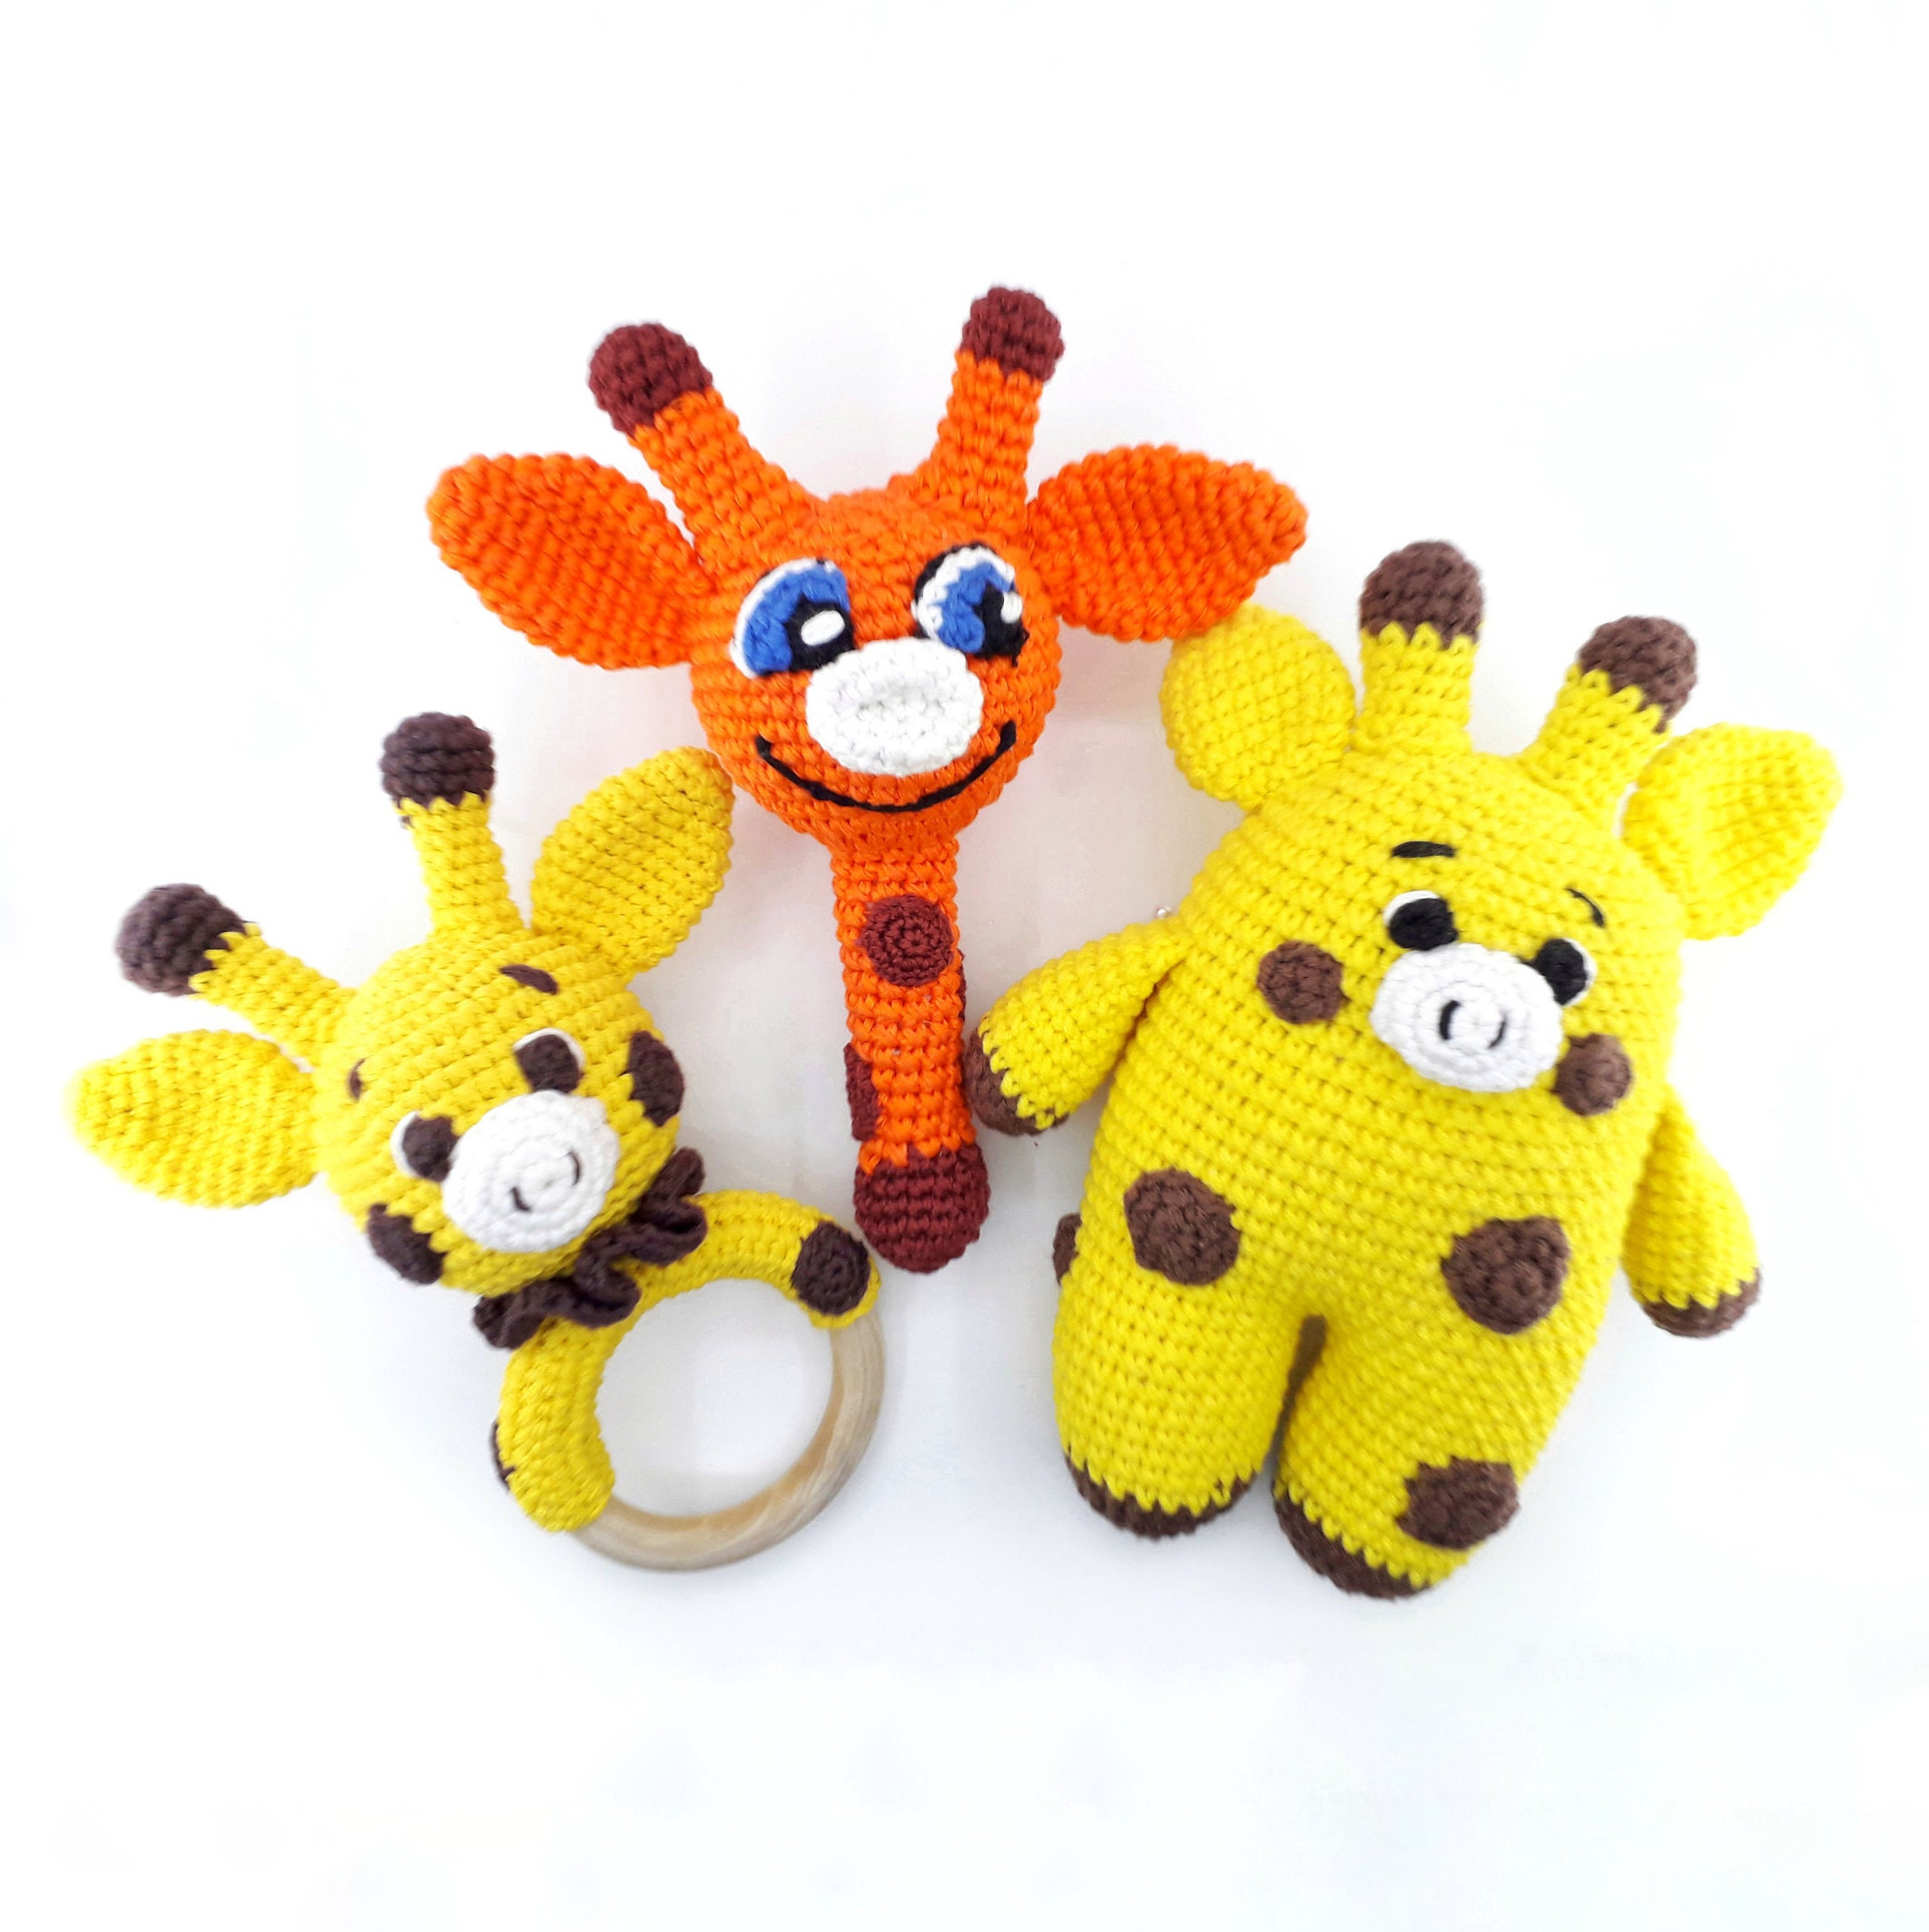 Amigurumi Giraffe Crochet Pattern 3 in 1 Crocheted Giraffe | Etsy